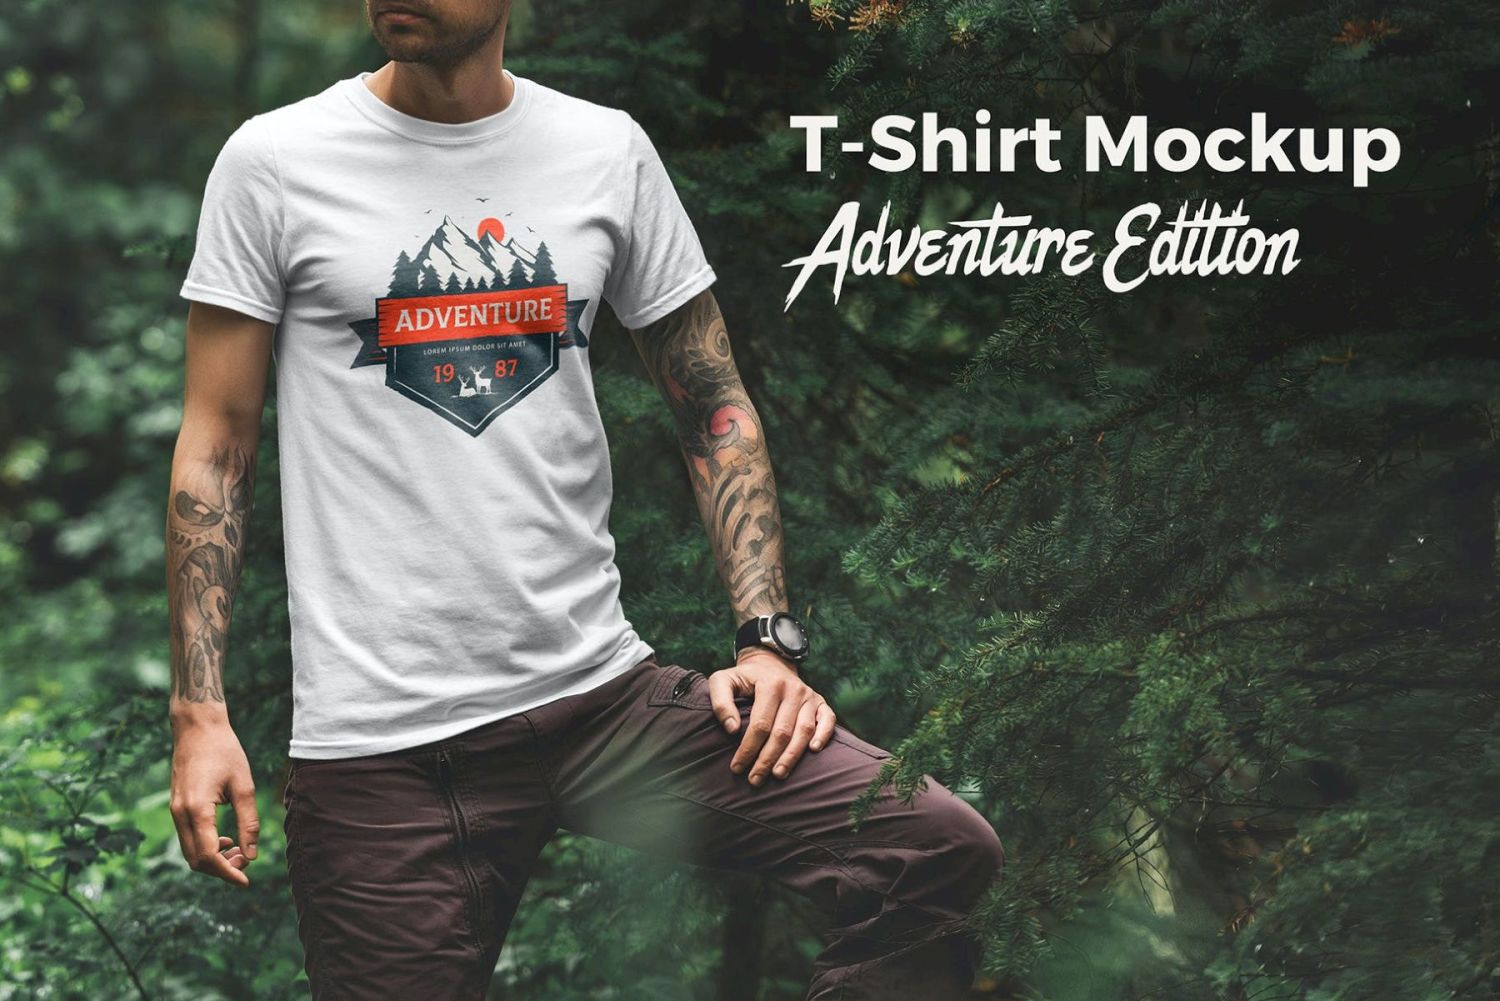 T恤样机冒险版 T-Shirt Mockup Adventure Edition插图